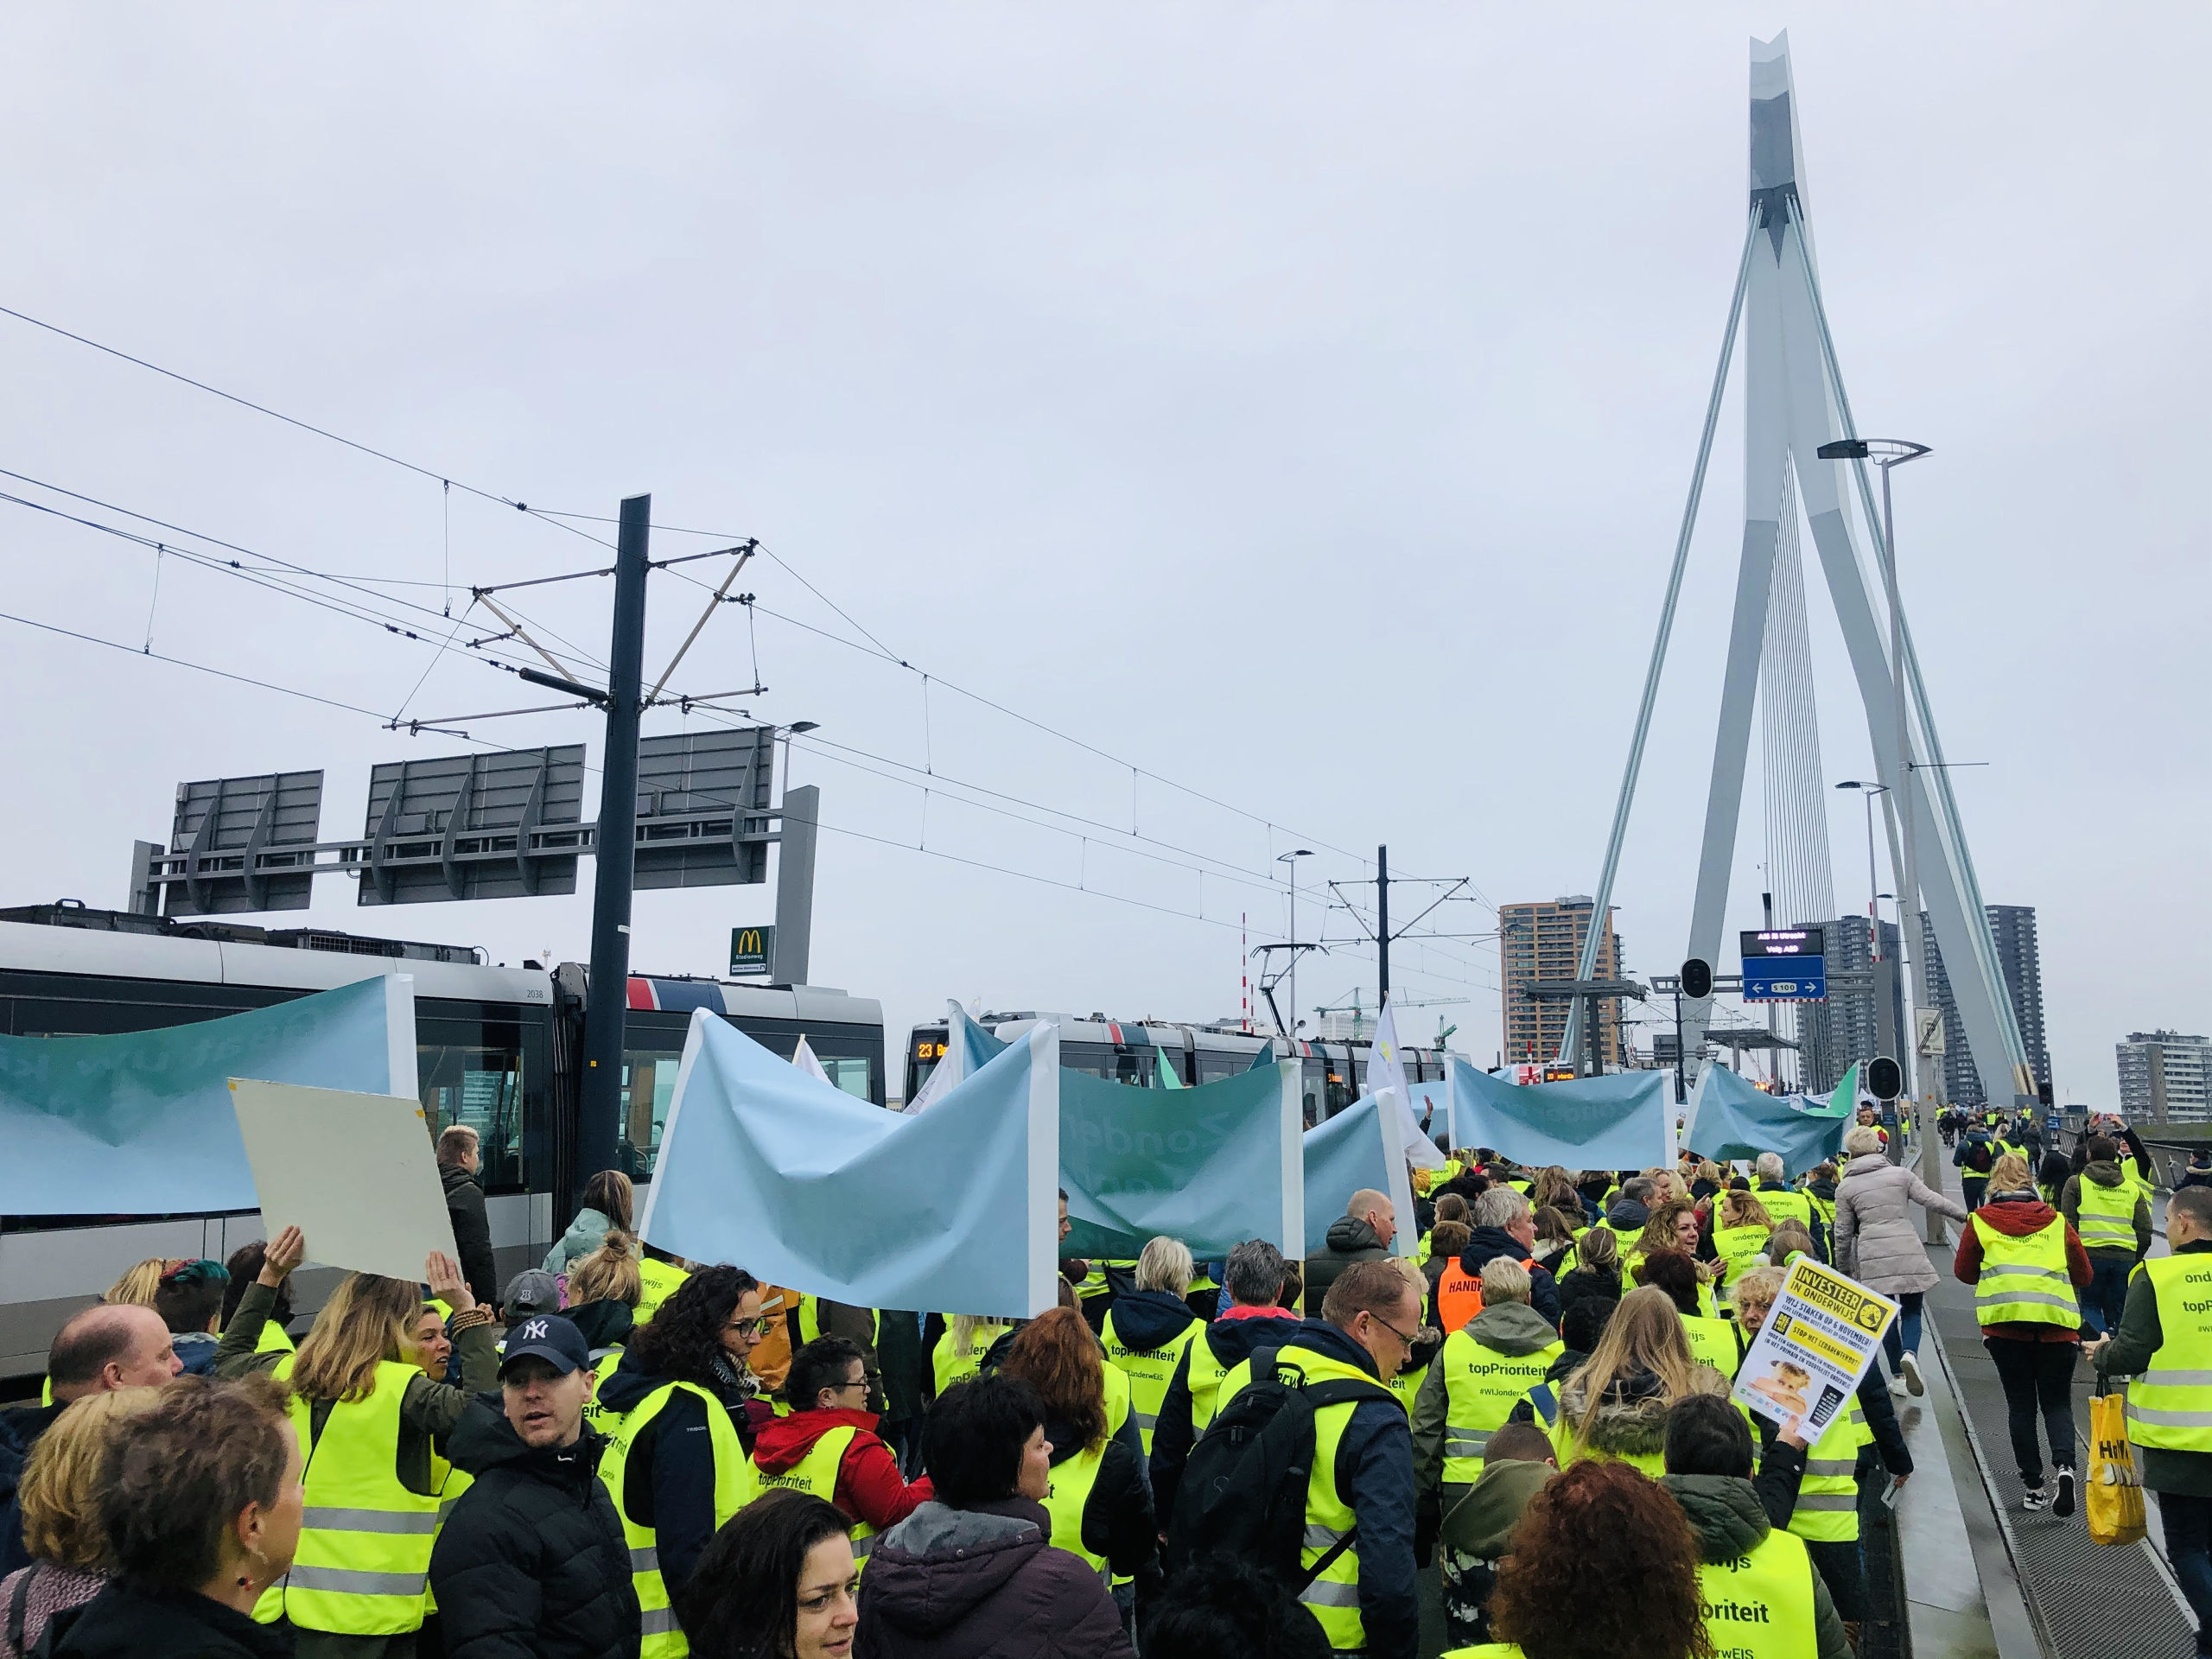 Demonstrerende leraren in Rotterdam